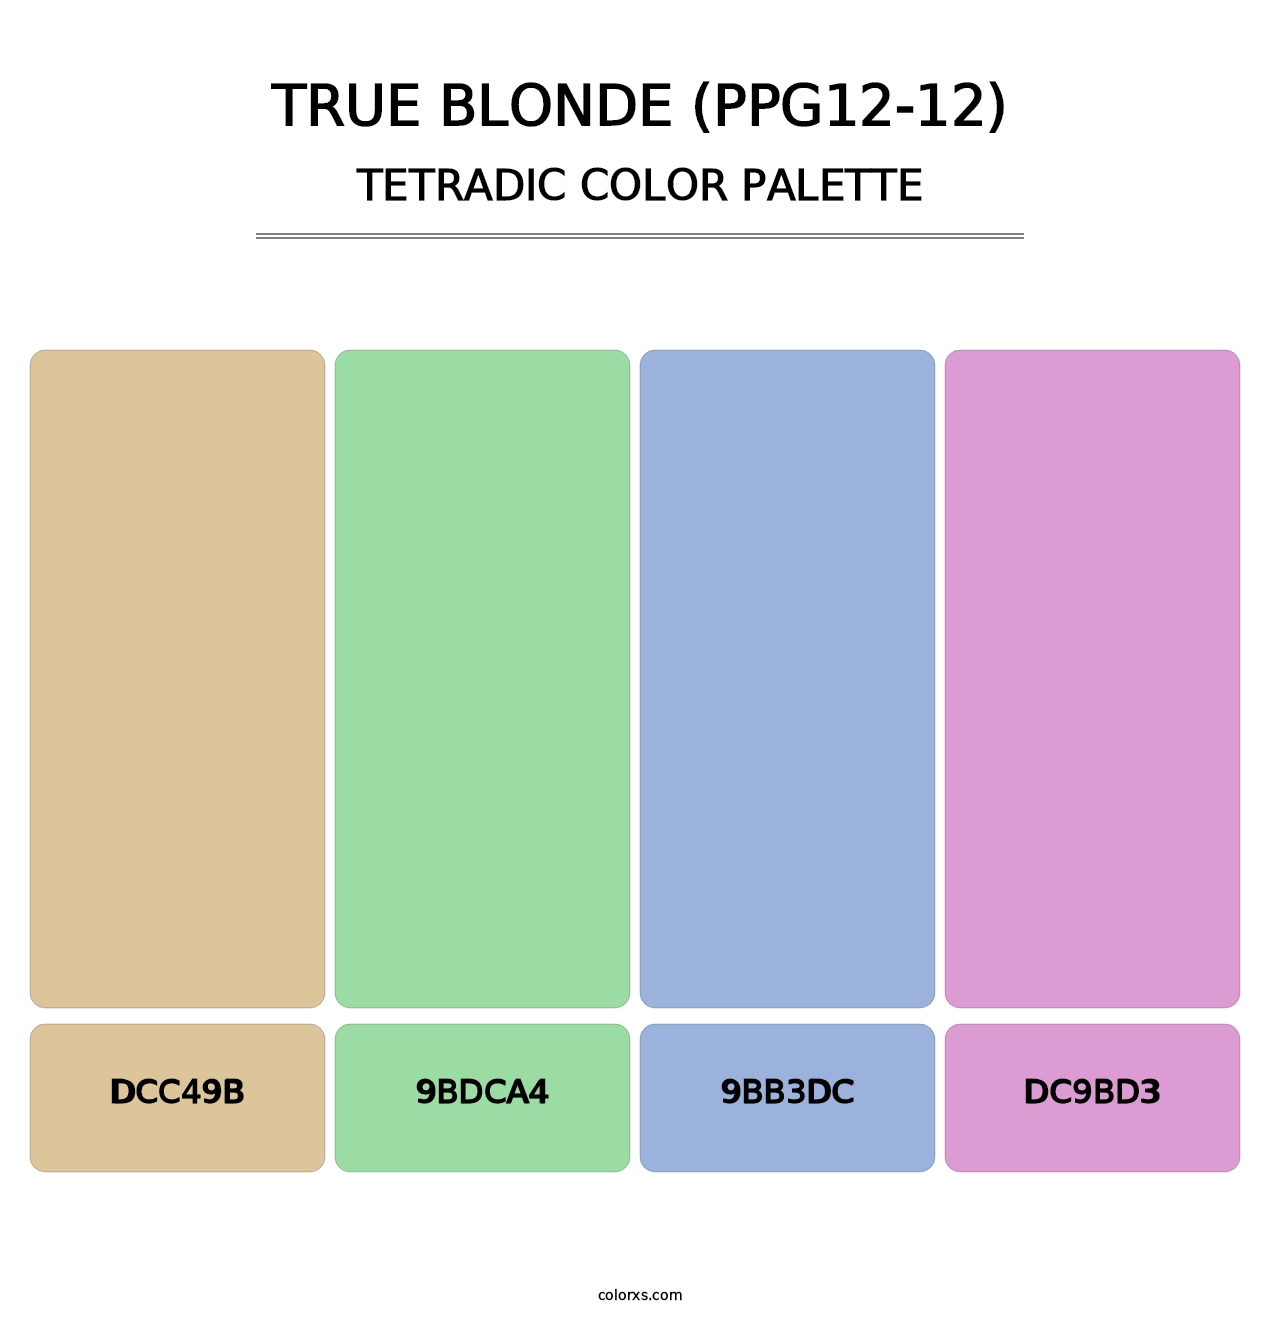 True Blonde (PPG12-12) - Tetradic Color Palette